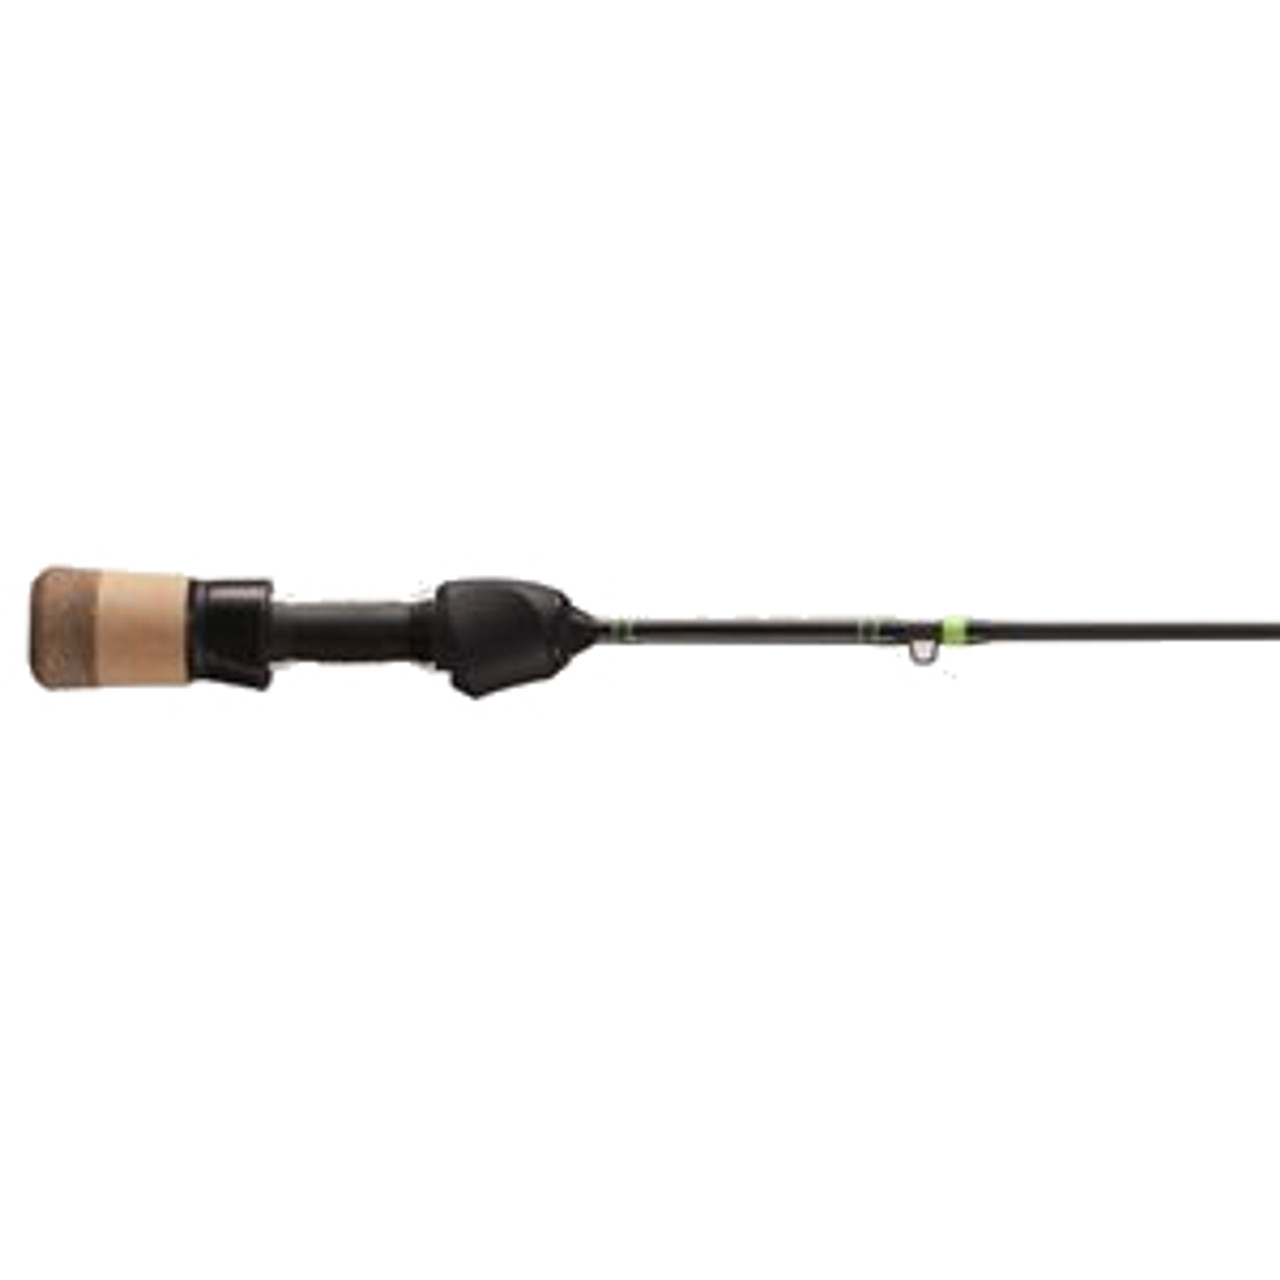 13 Fishing Tickle Stick w/ White Reel Seat Rod - TS2